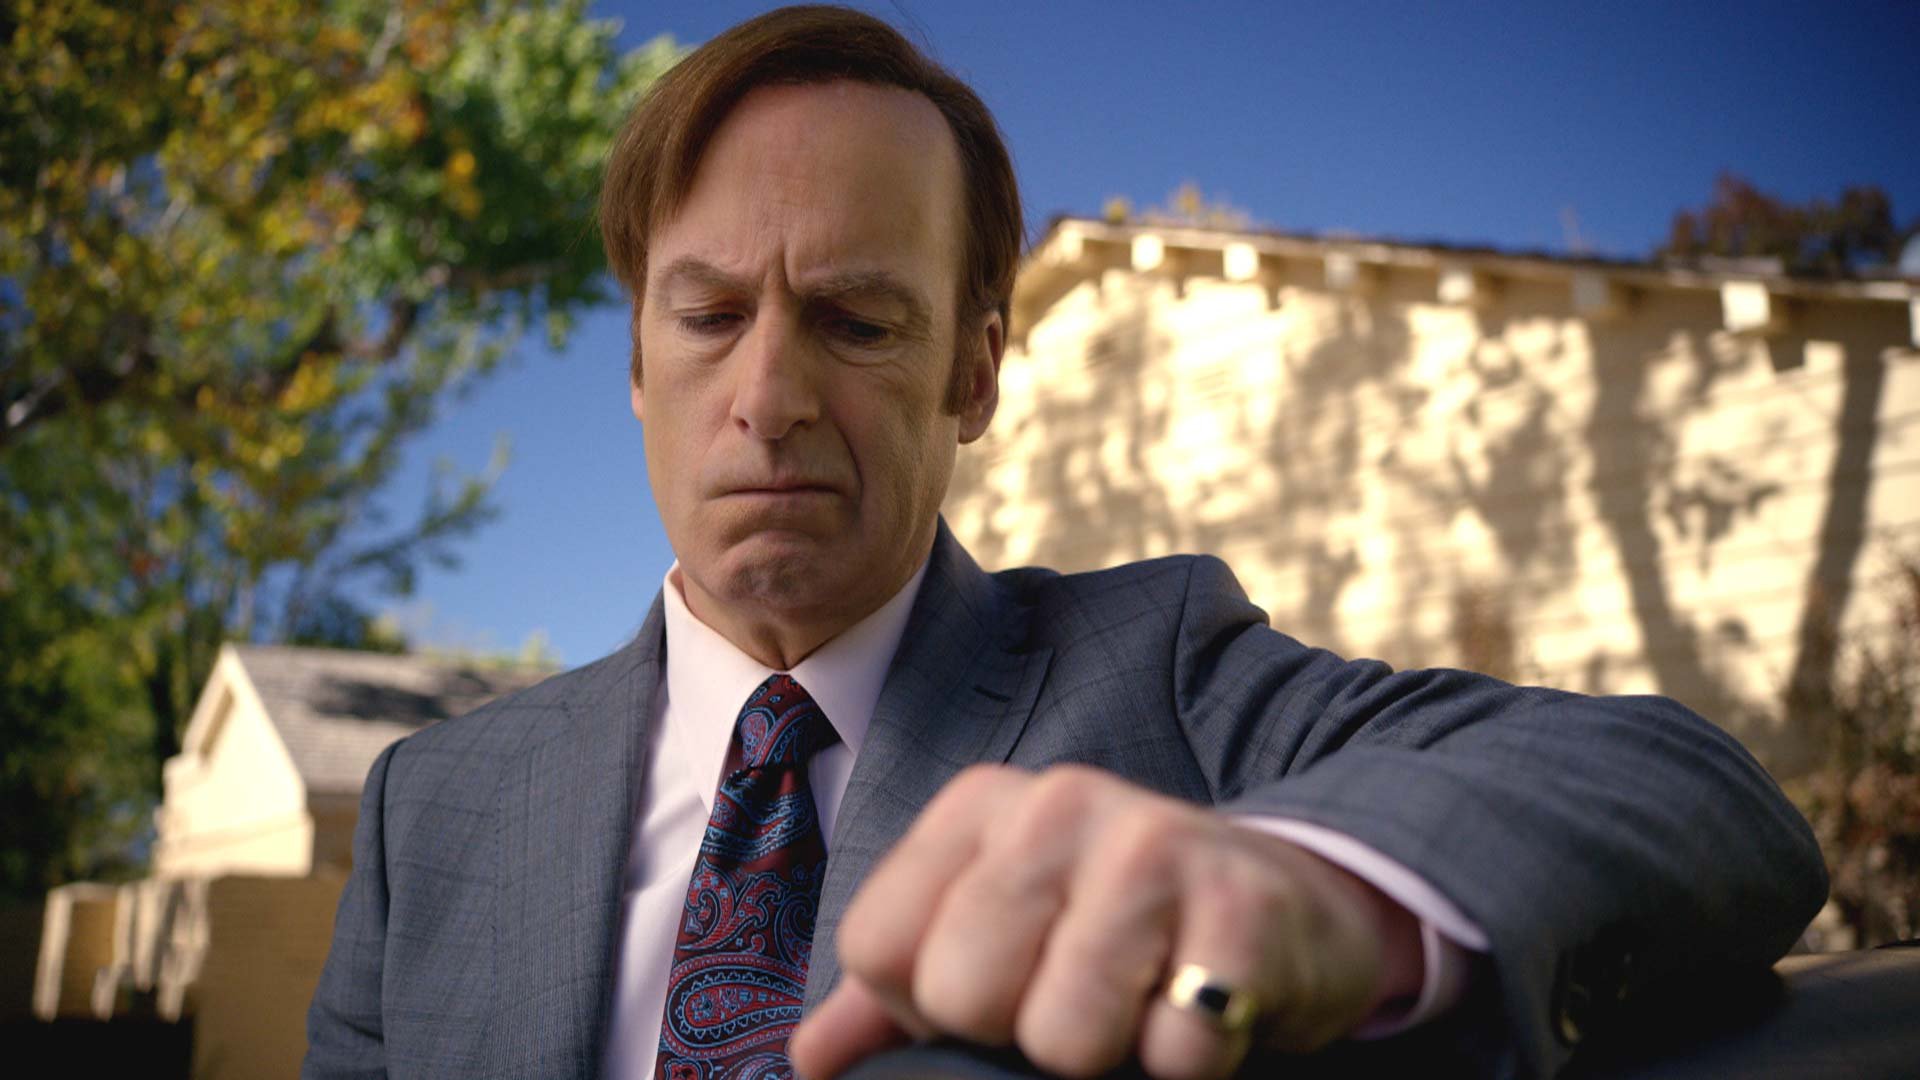 Better Call Saul é renovada para a terceira temporada